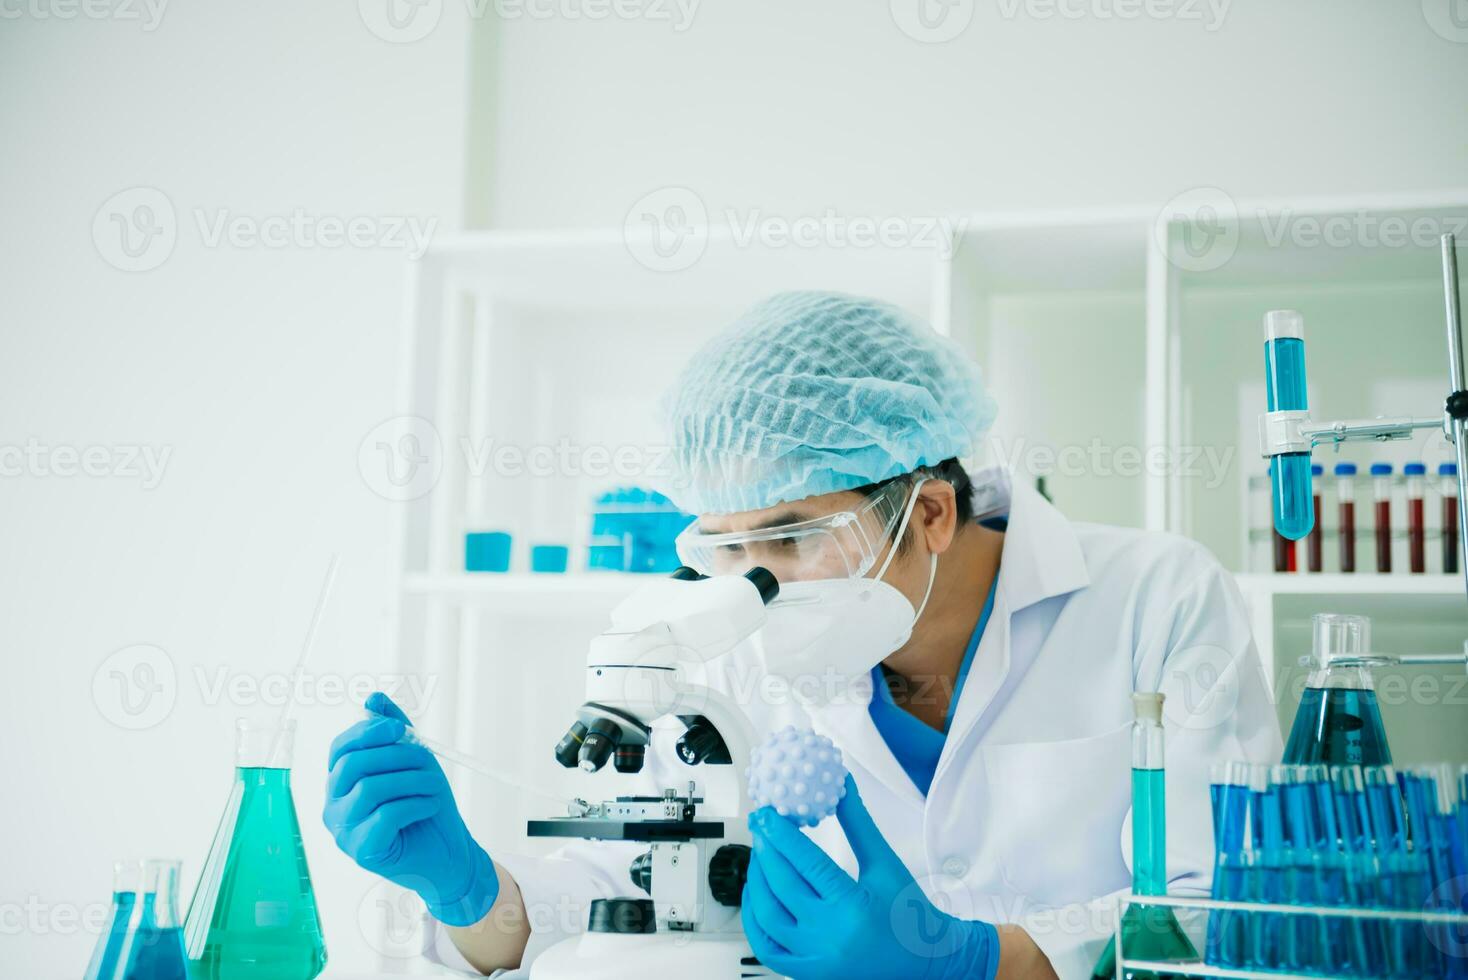 cientista misturando líquidos químicos no laboratório de química. pesquisador trabalhando no laboratório químico foto